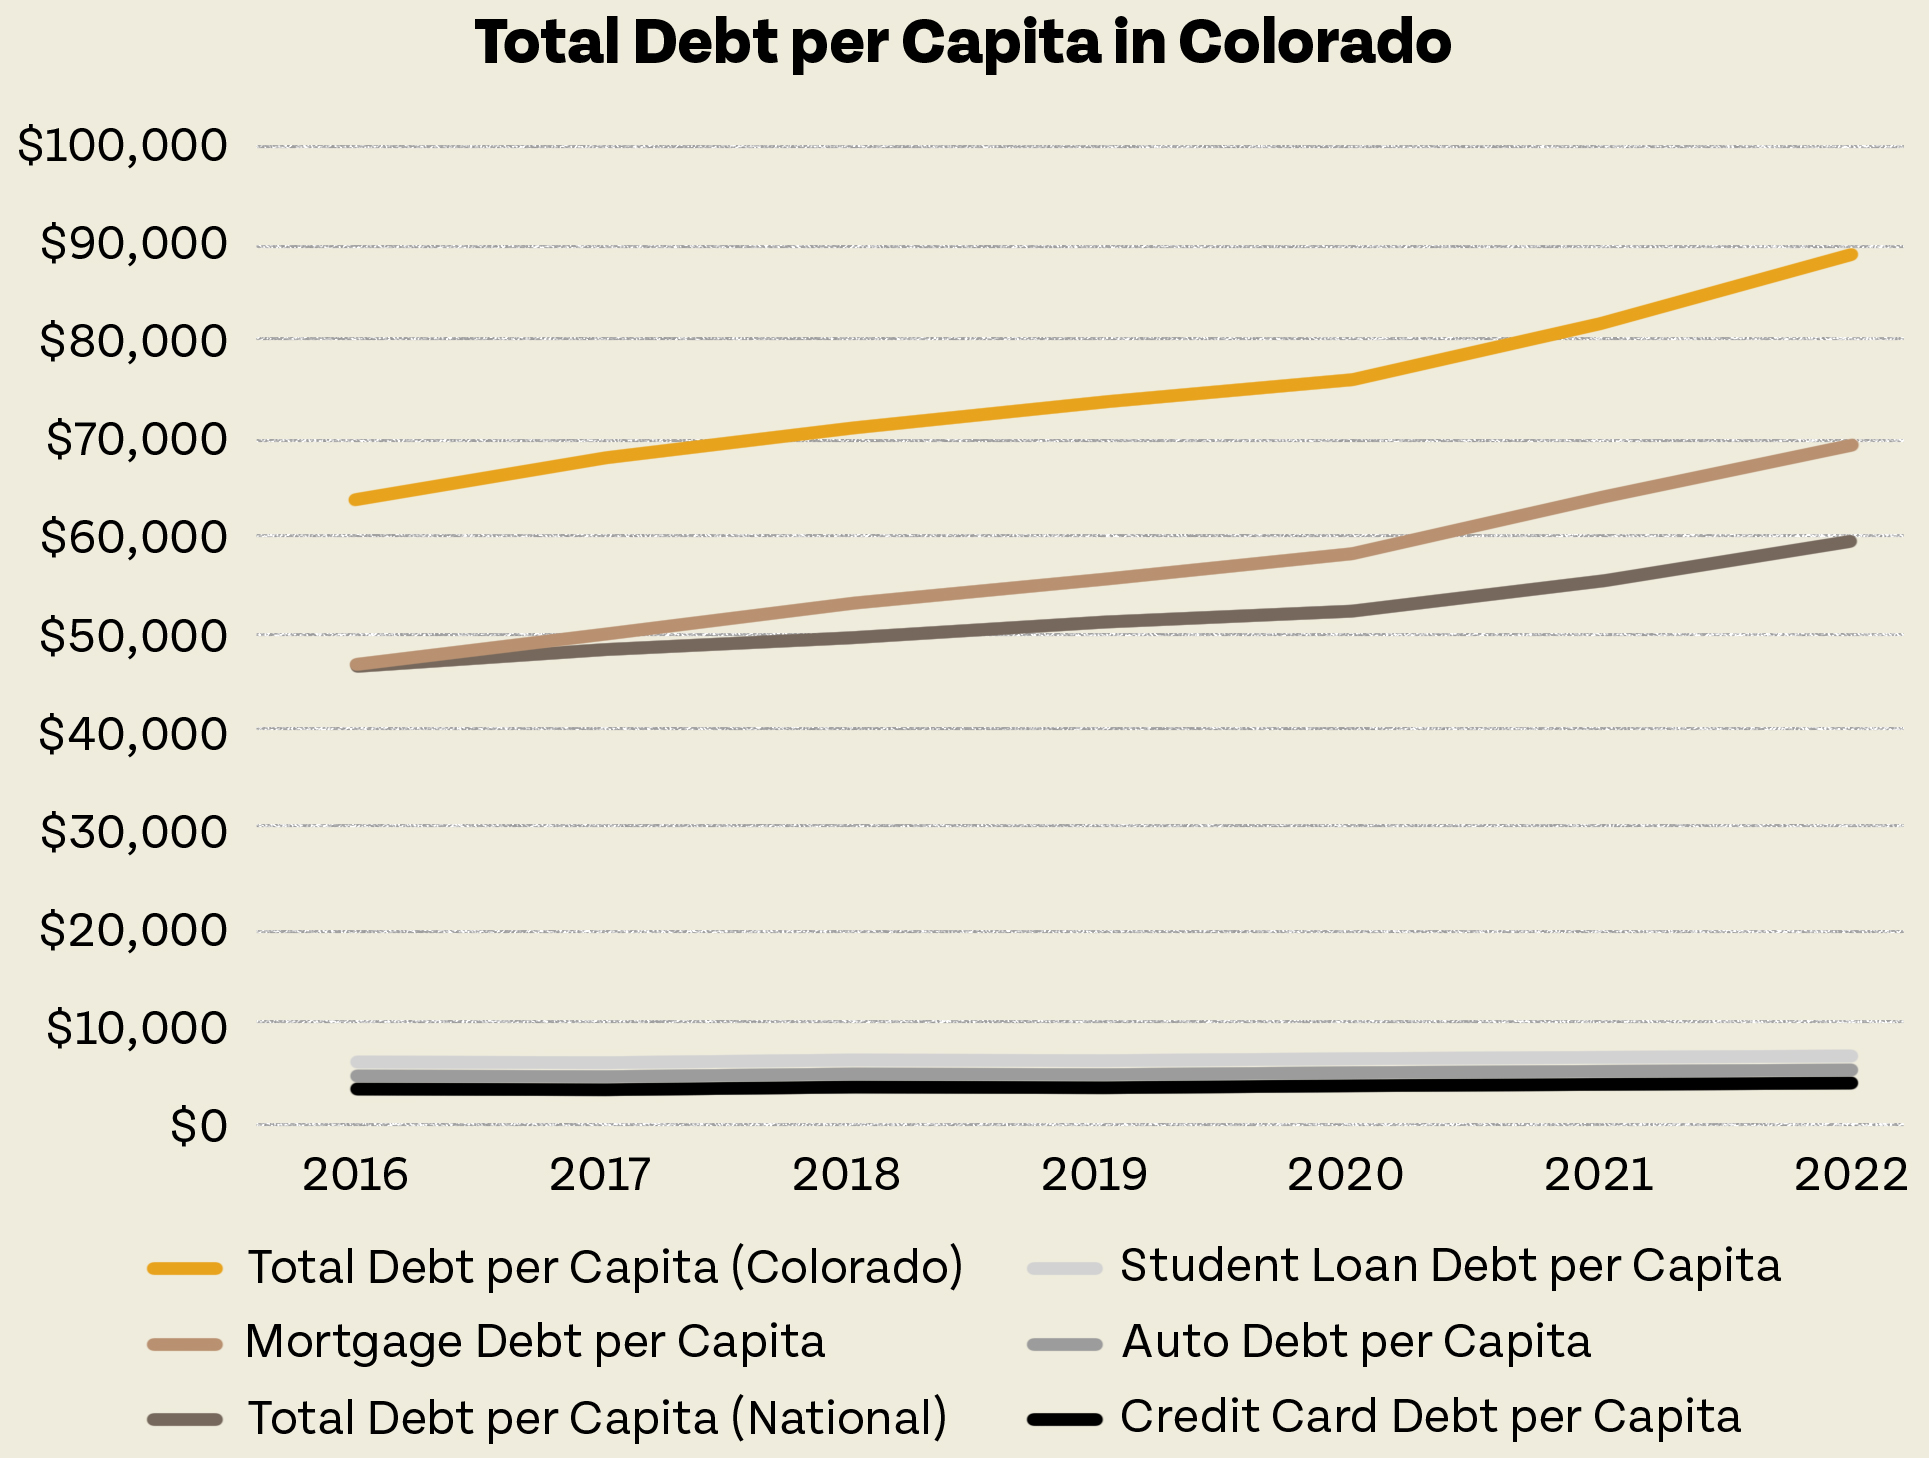 Total Debt per Capita in Colorado